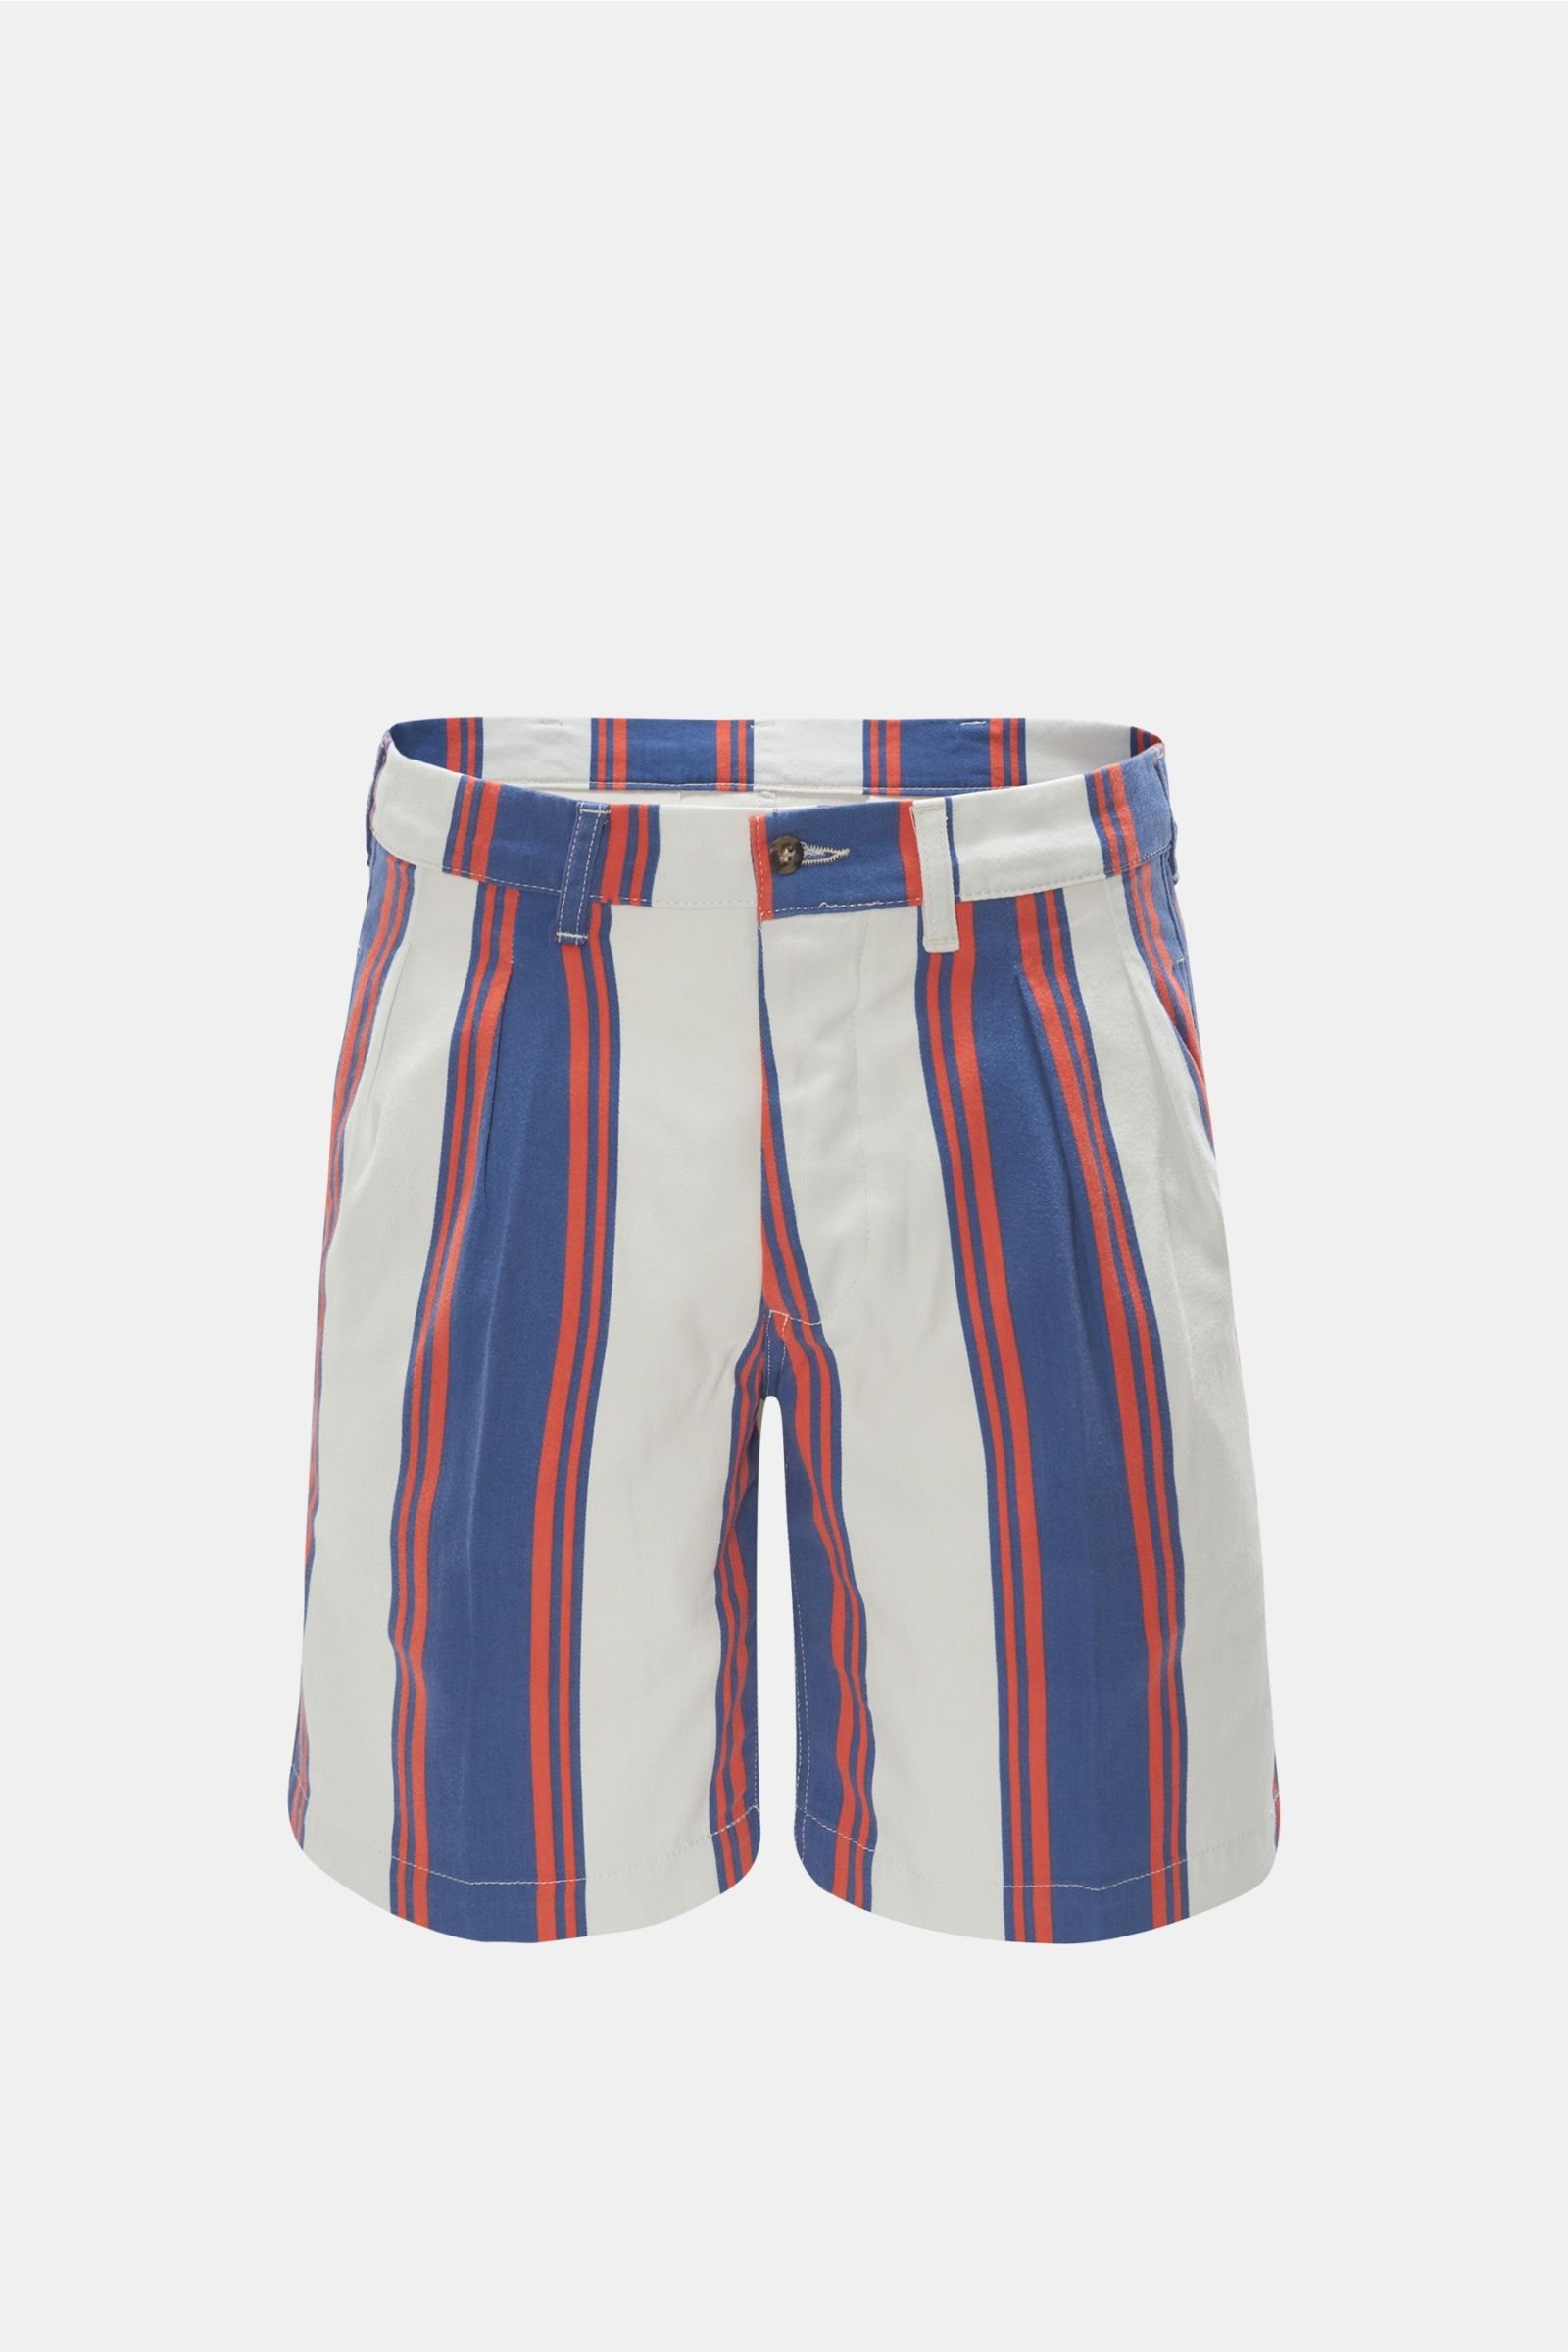 Bermuda shorts 'Aaza' dark blue/red/white striped